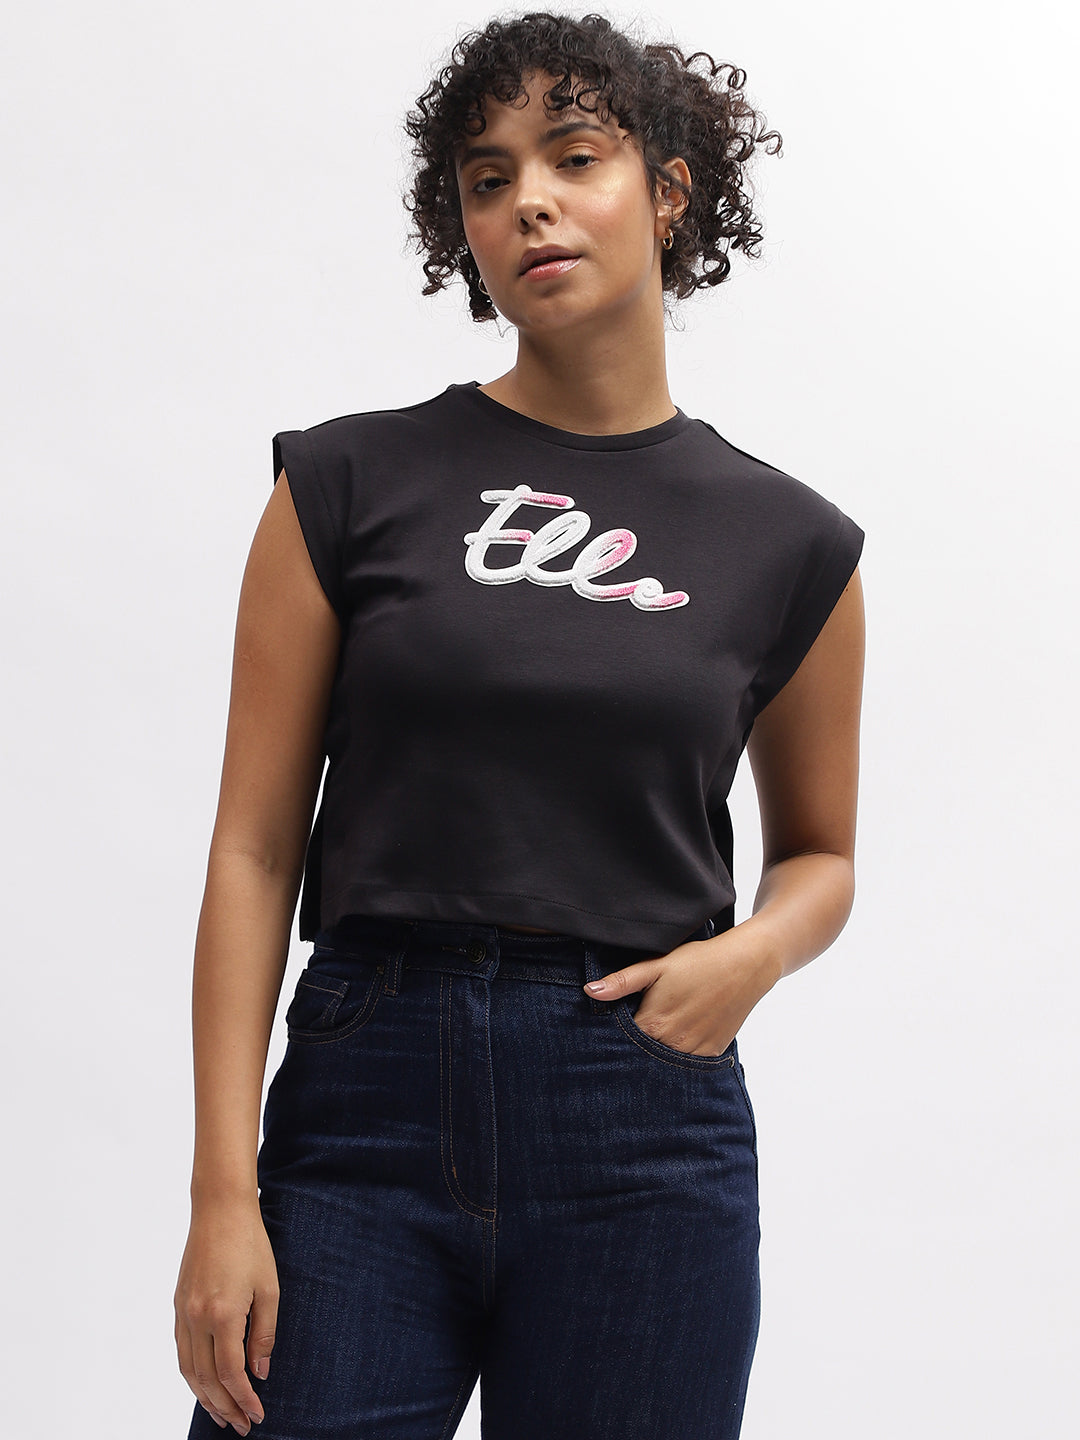 Buy Premium Tshirt For Women Online